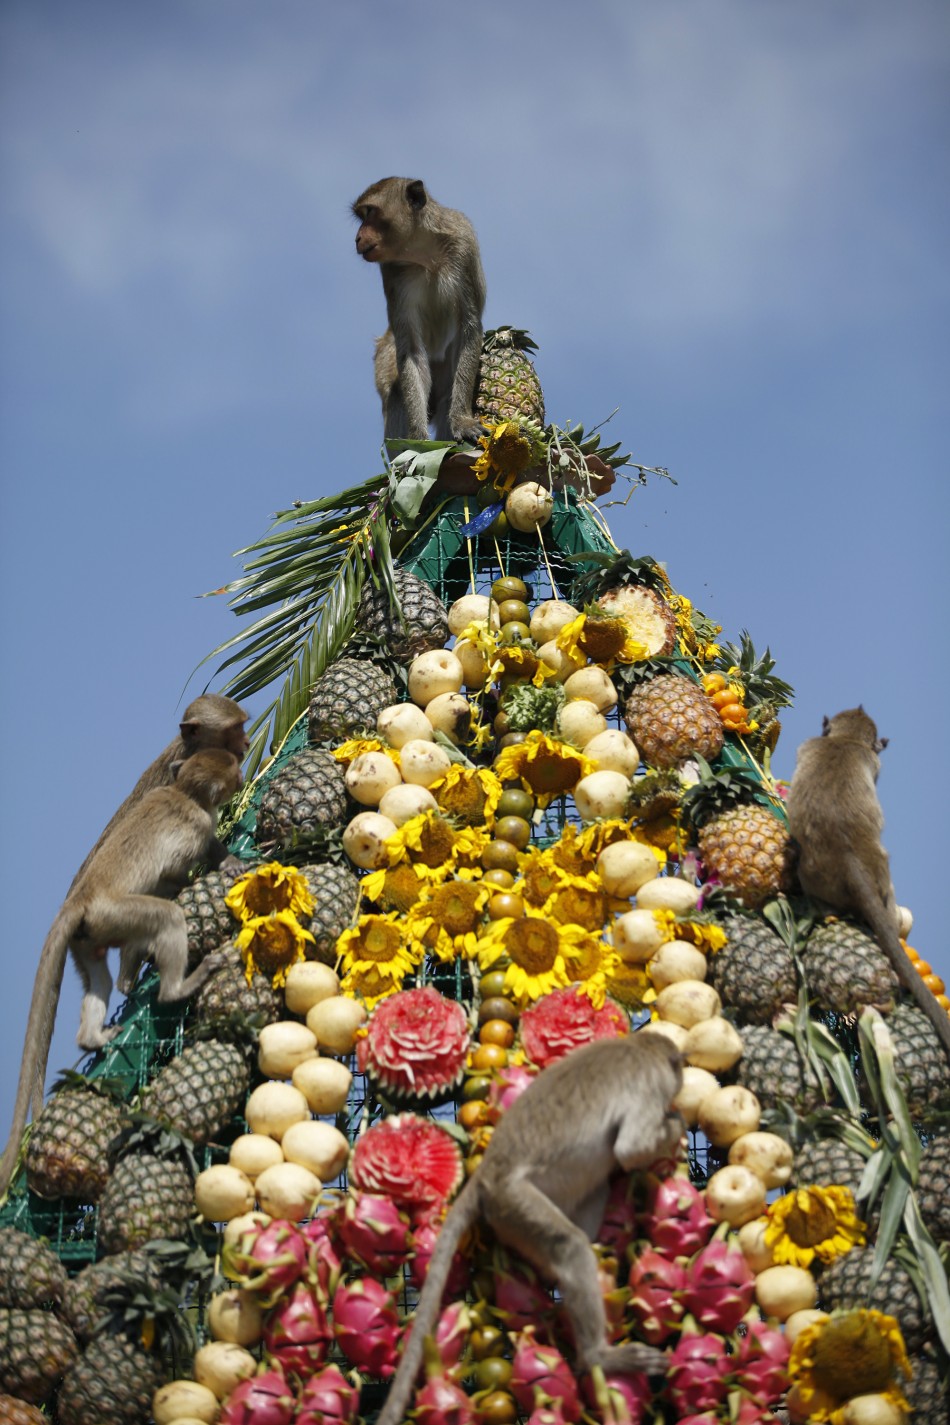 The Lopburi Monkey Festival